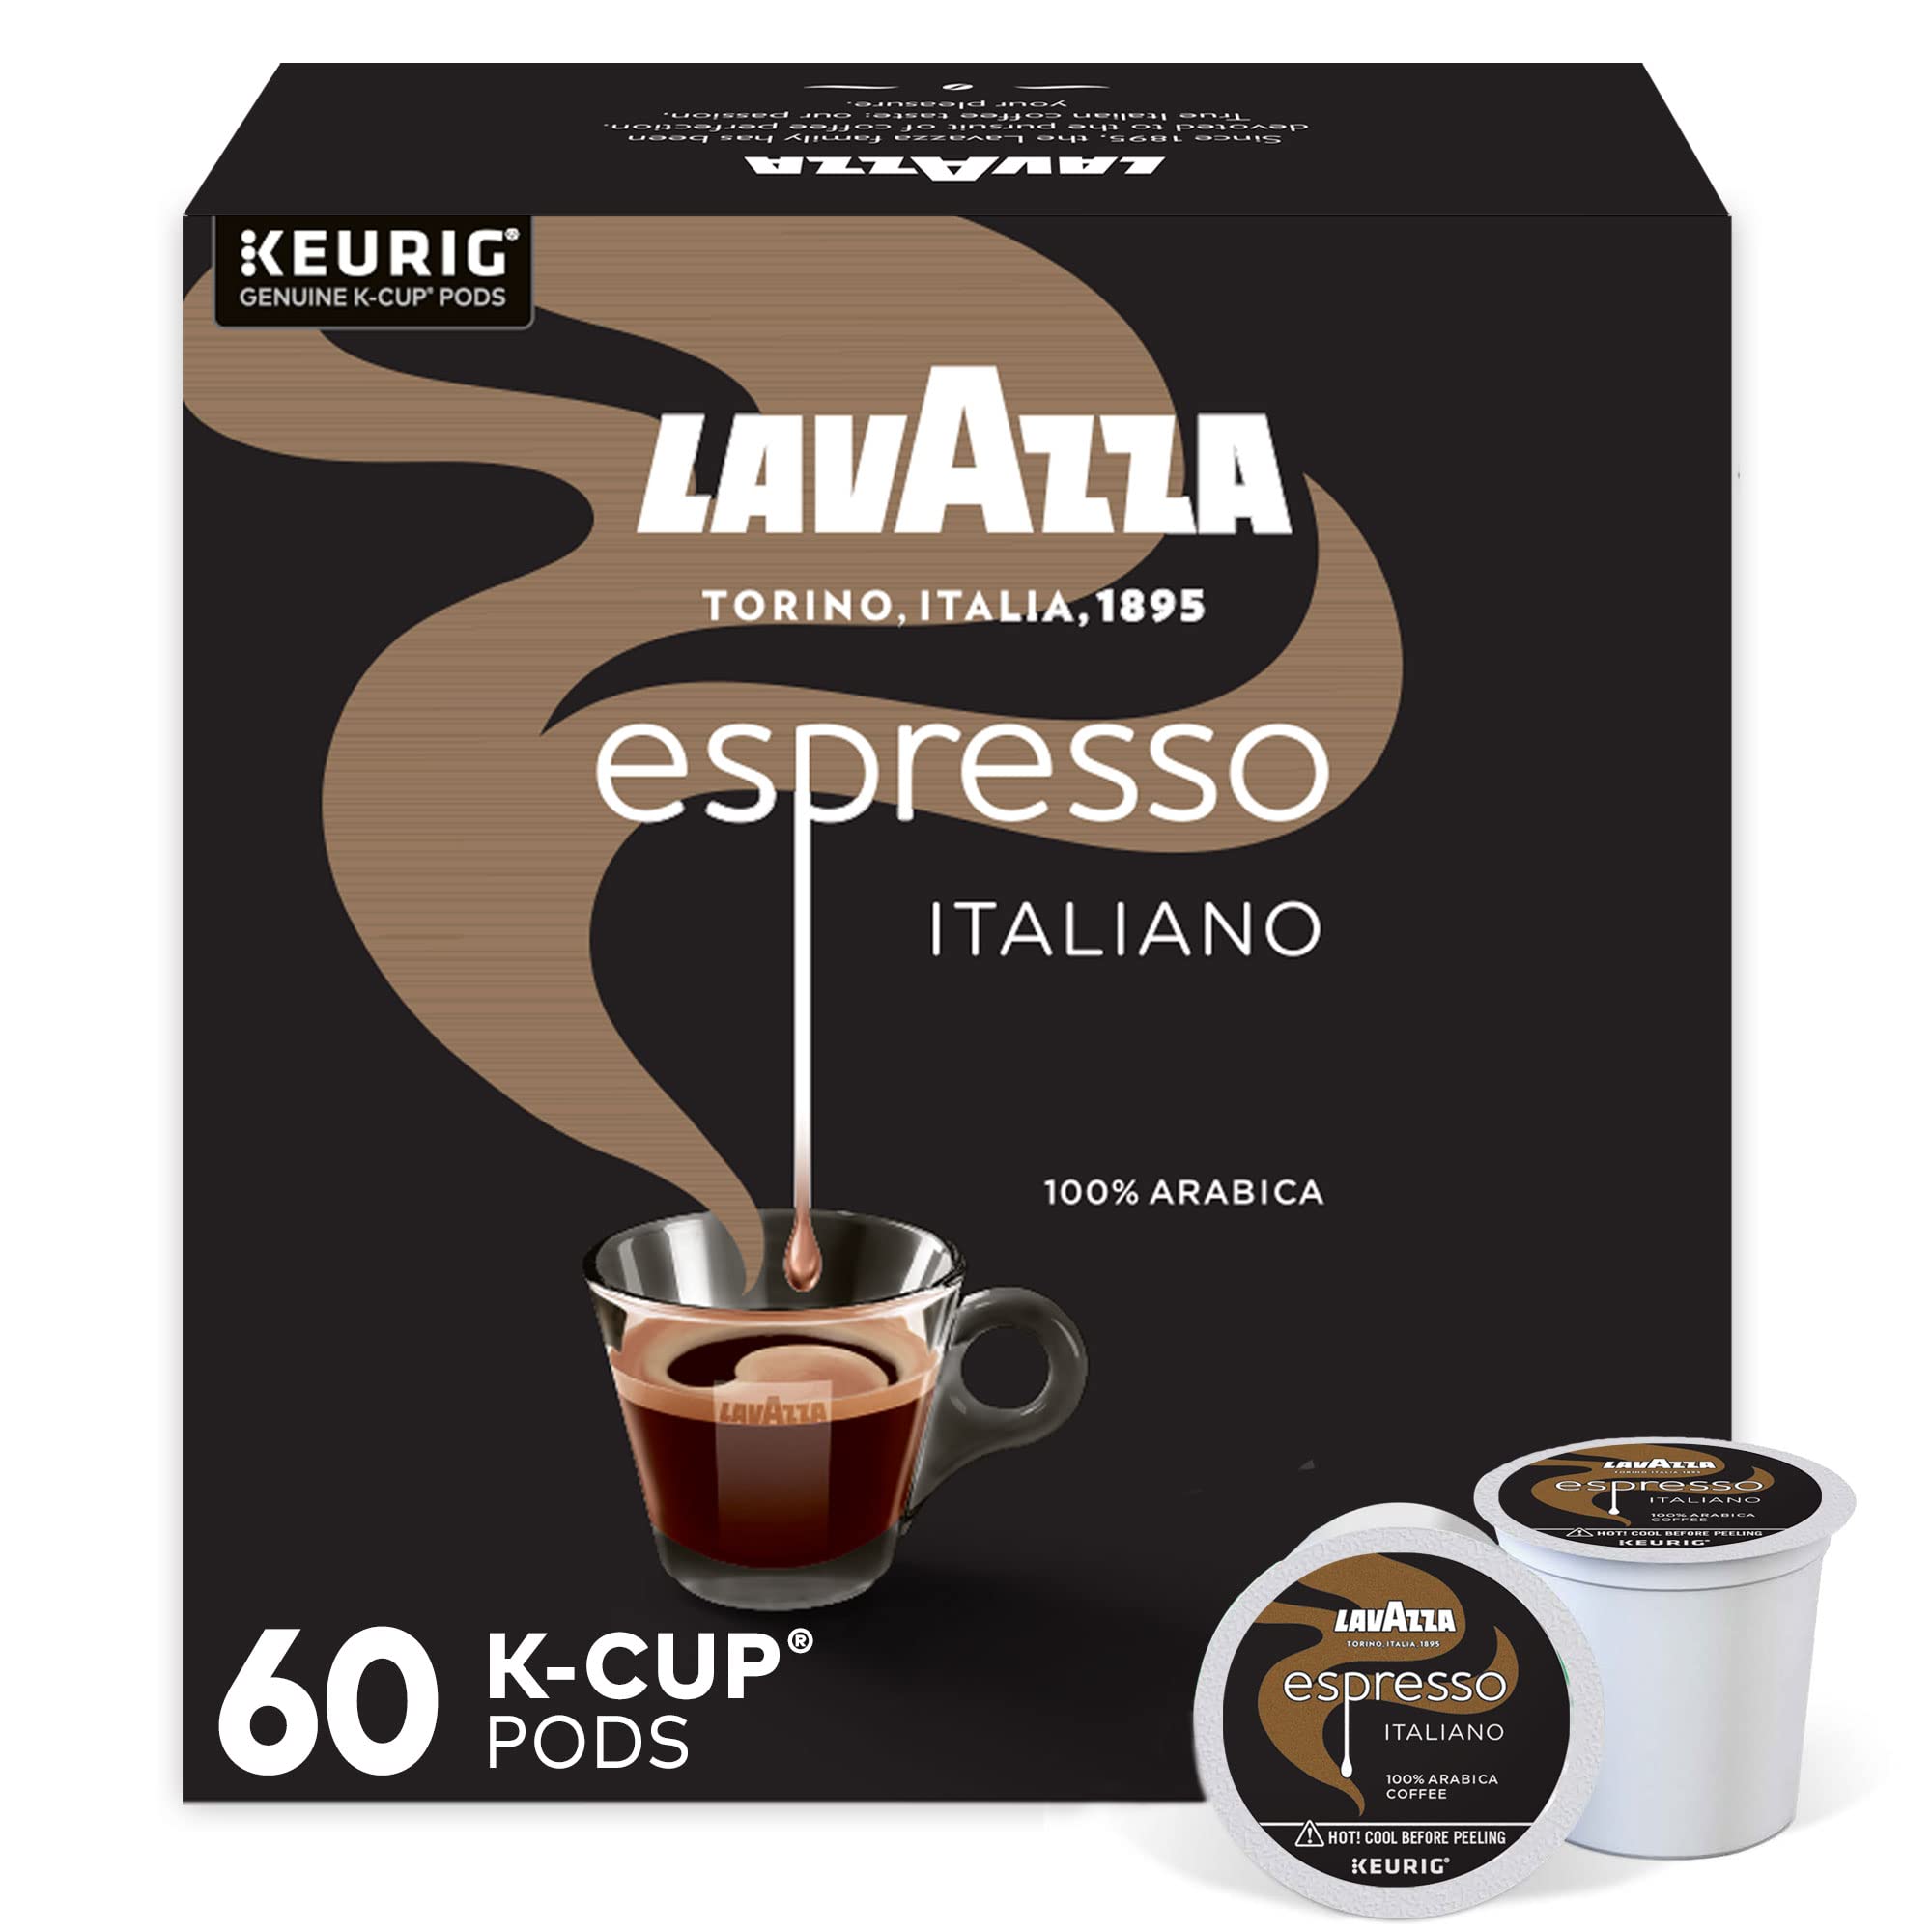 Lavazza Espresso Italiano Single-Serve Coffee K-Cups for Keurig Brewer, Medium Roast, 100% Arabica, Value Pack, 10 Count (Pack of 6) Espresso Italiano 10 Count (Pack of 6), Now Only $29.58